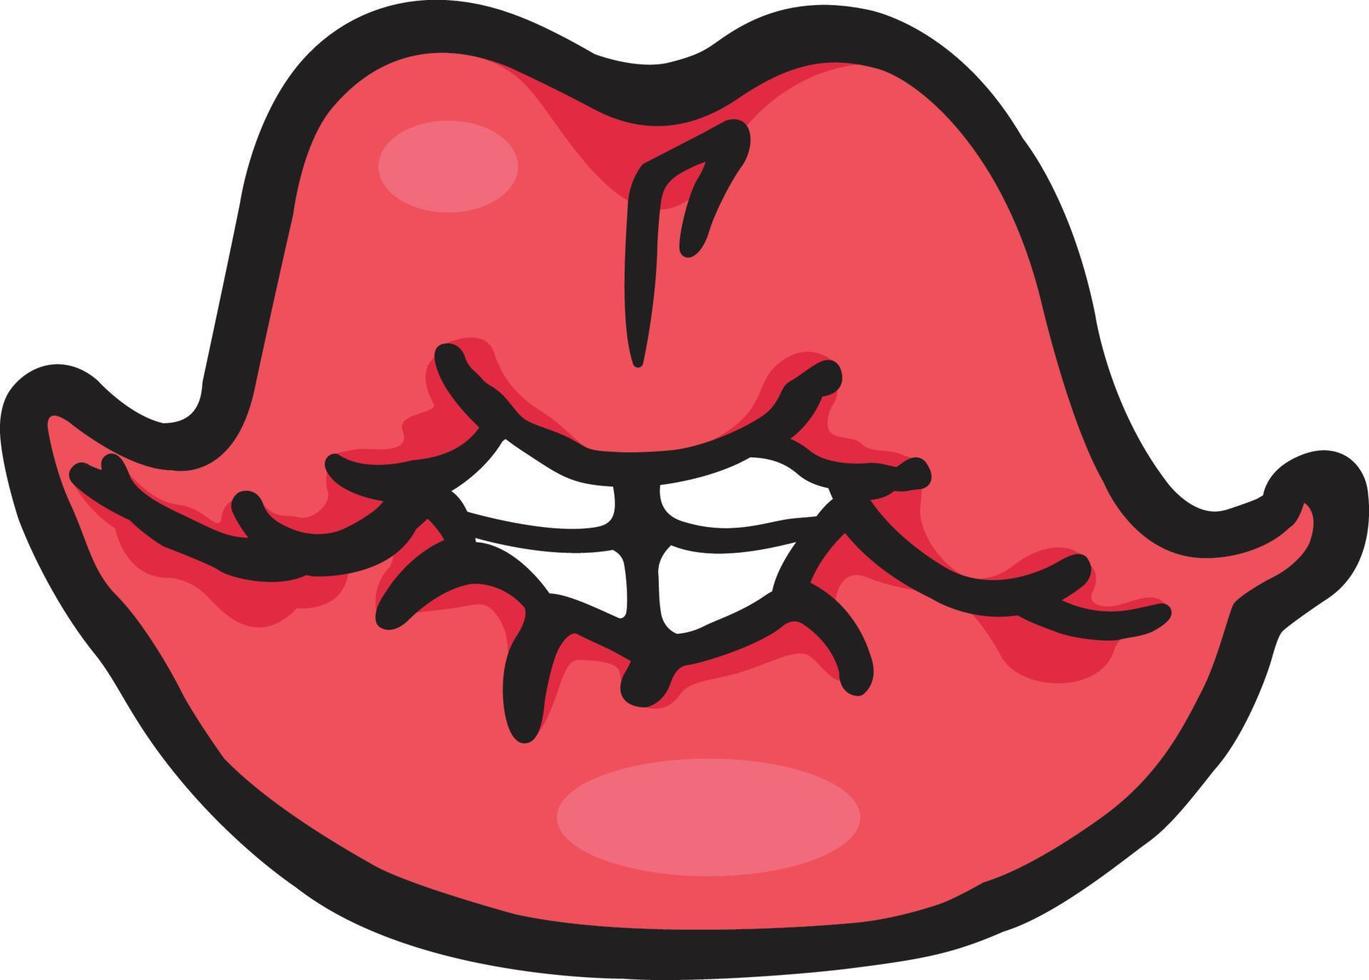 Red Kissable Lips Illustration vector